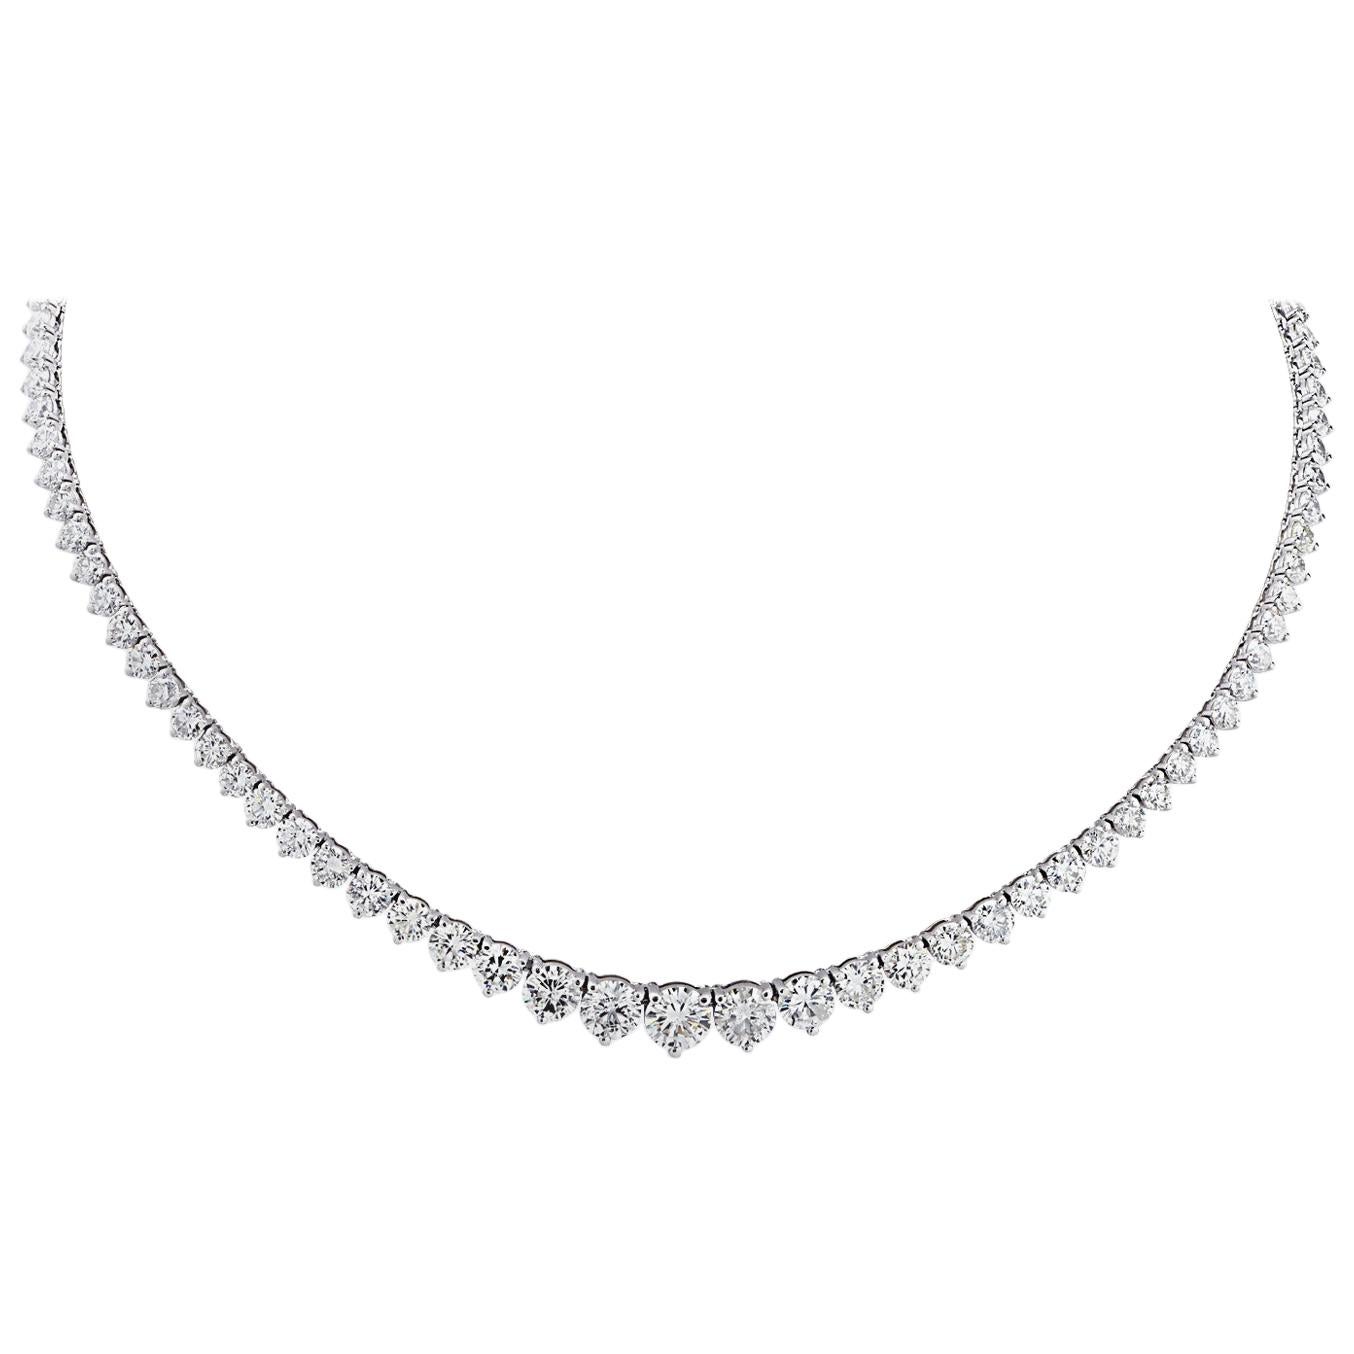 Vivid Diamonds 22.7 Carat Diamond Riviere Necklace